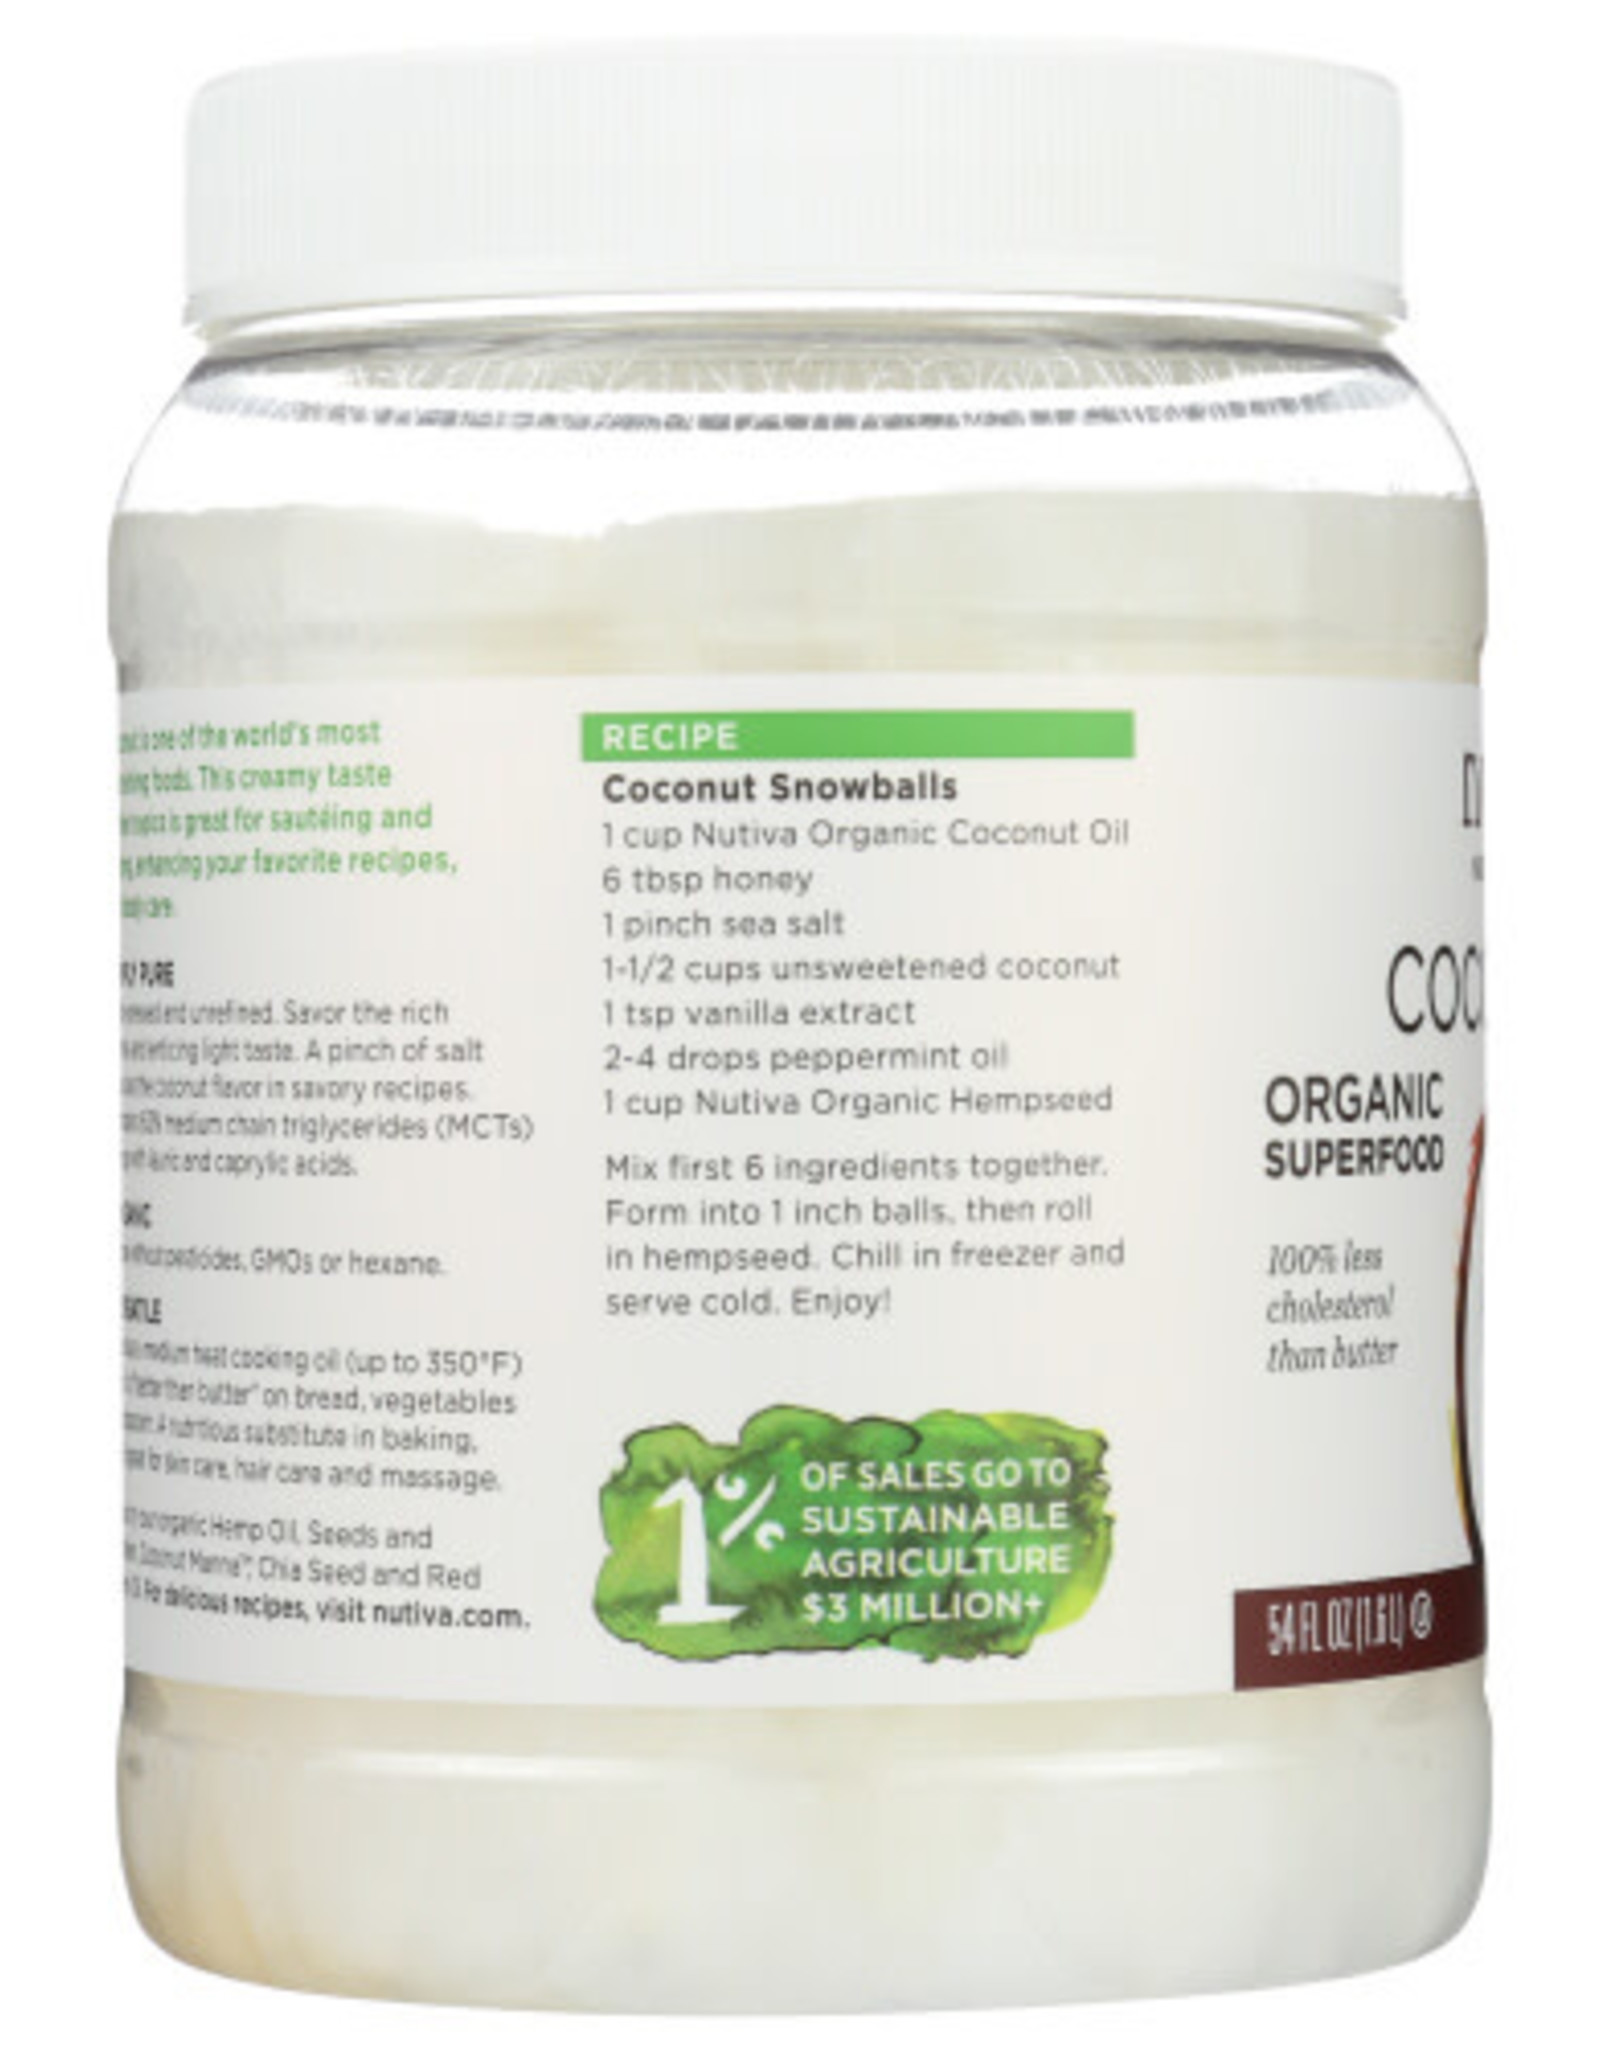 NUTIVA® Nutiva OG Coconut Oil 54 oz